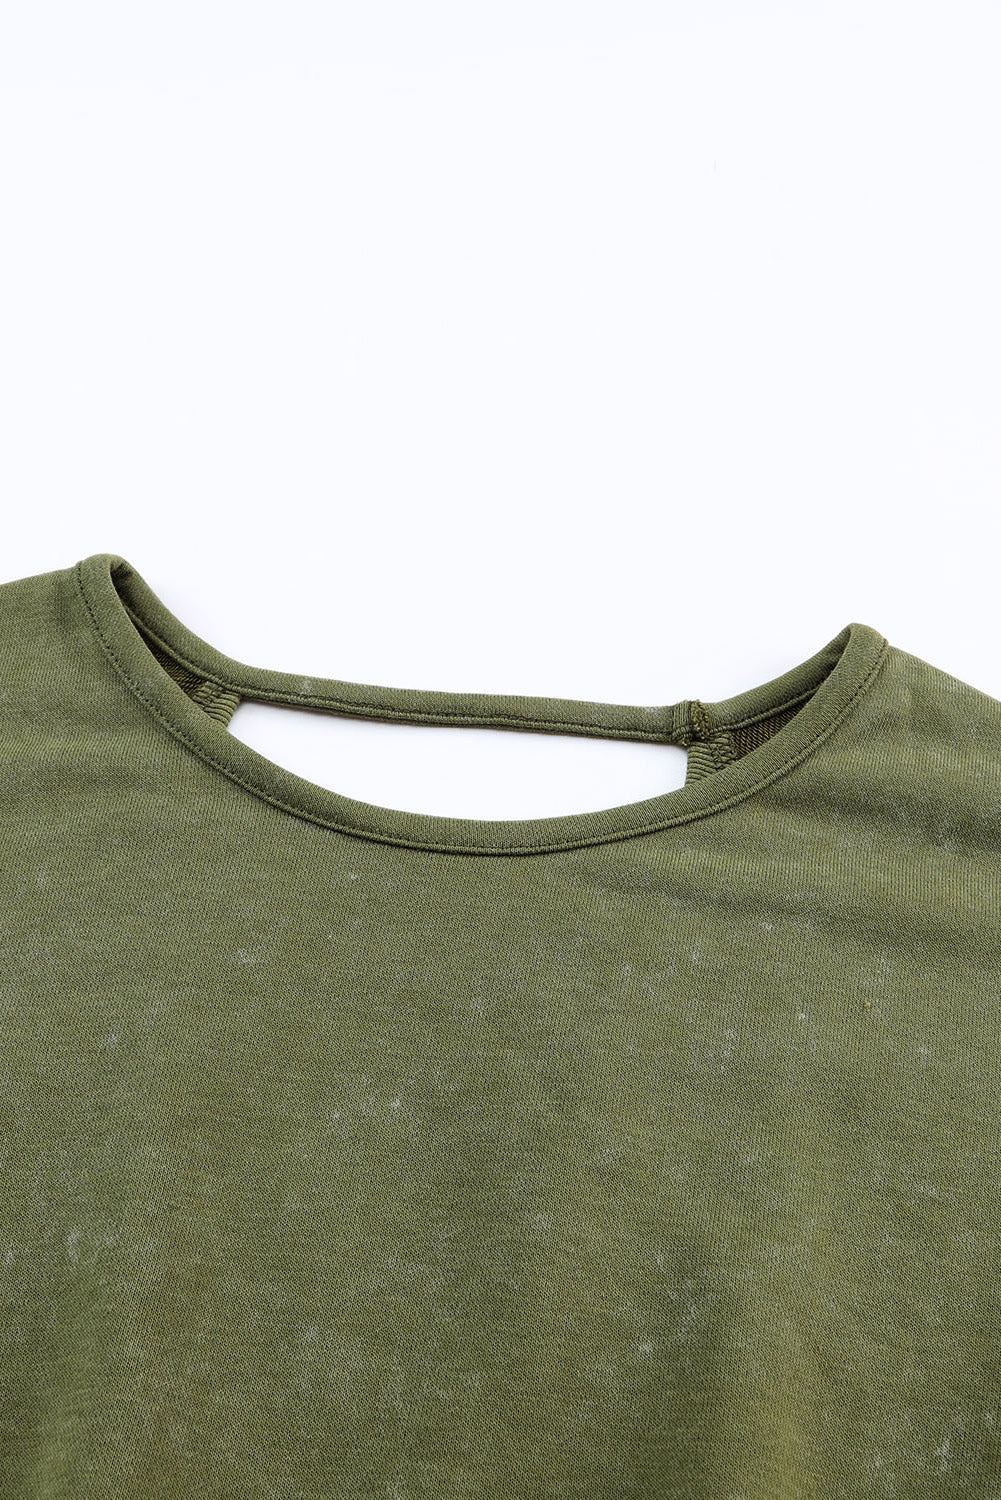 Green Acid Wash V-shape Open Back Sweatshirt